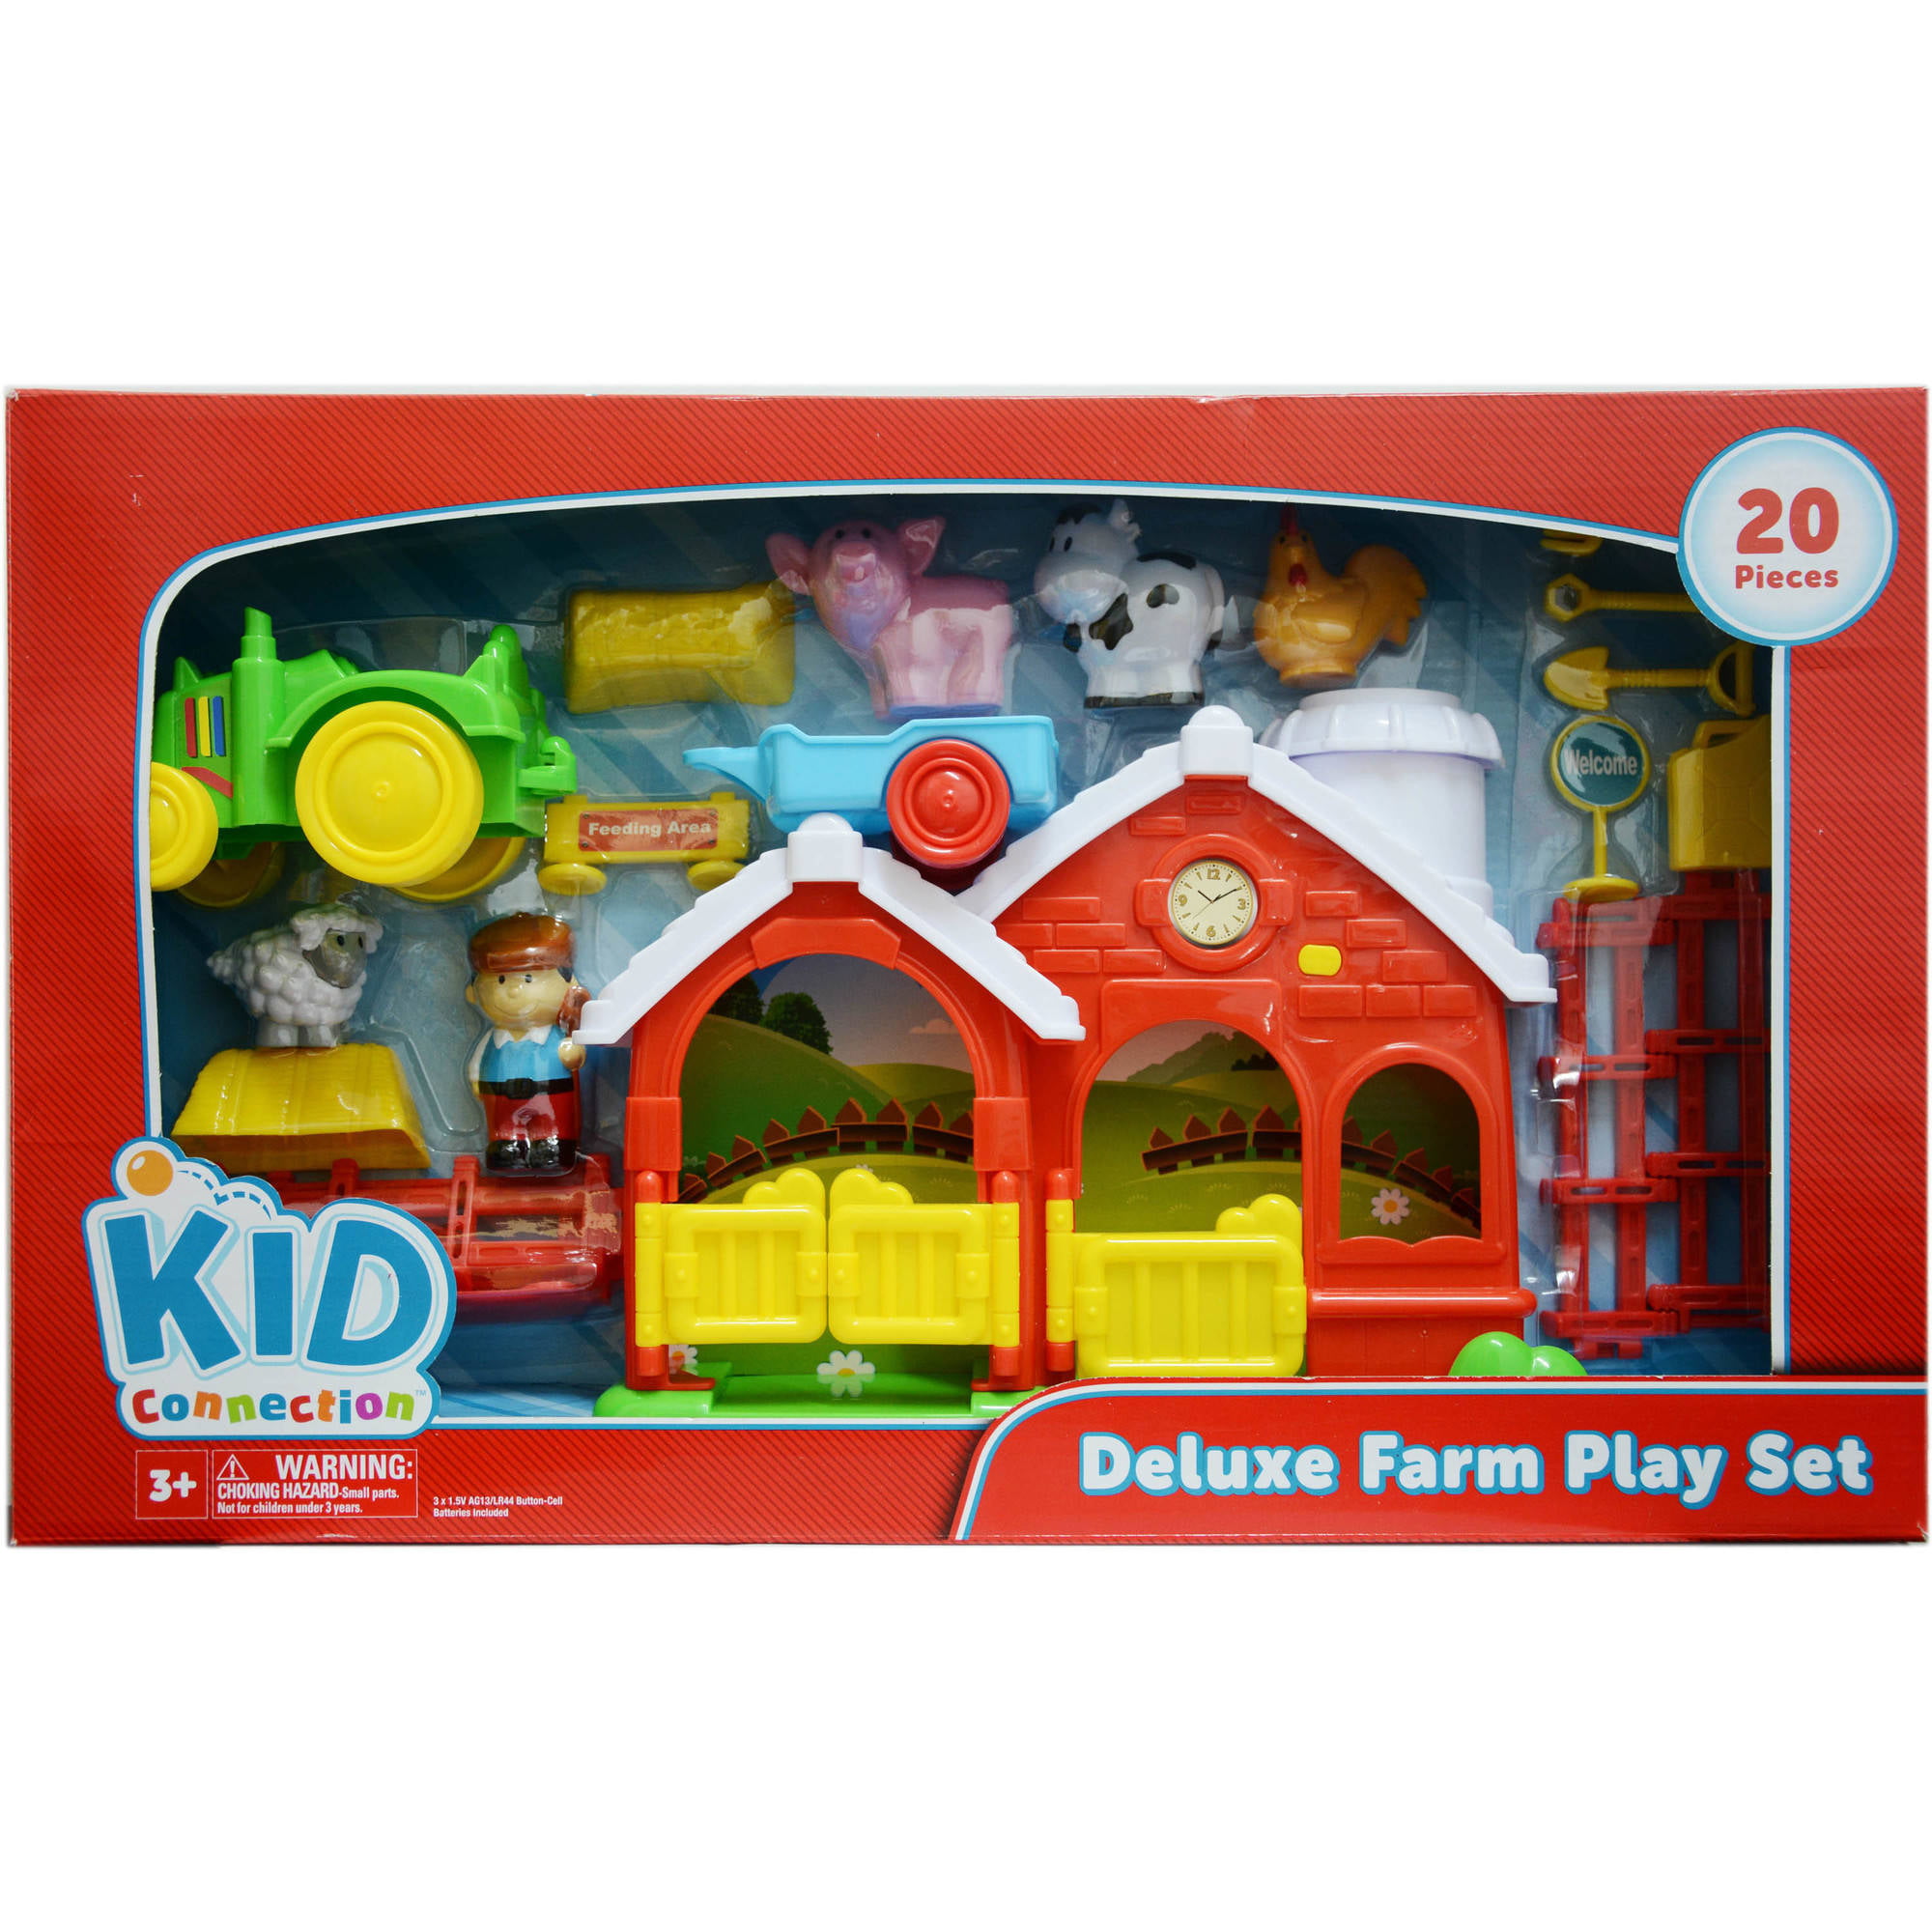 children's play farm set